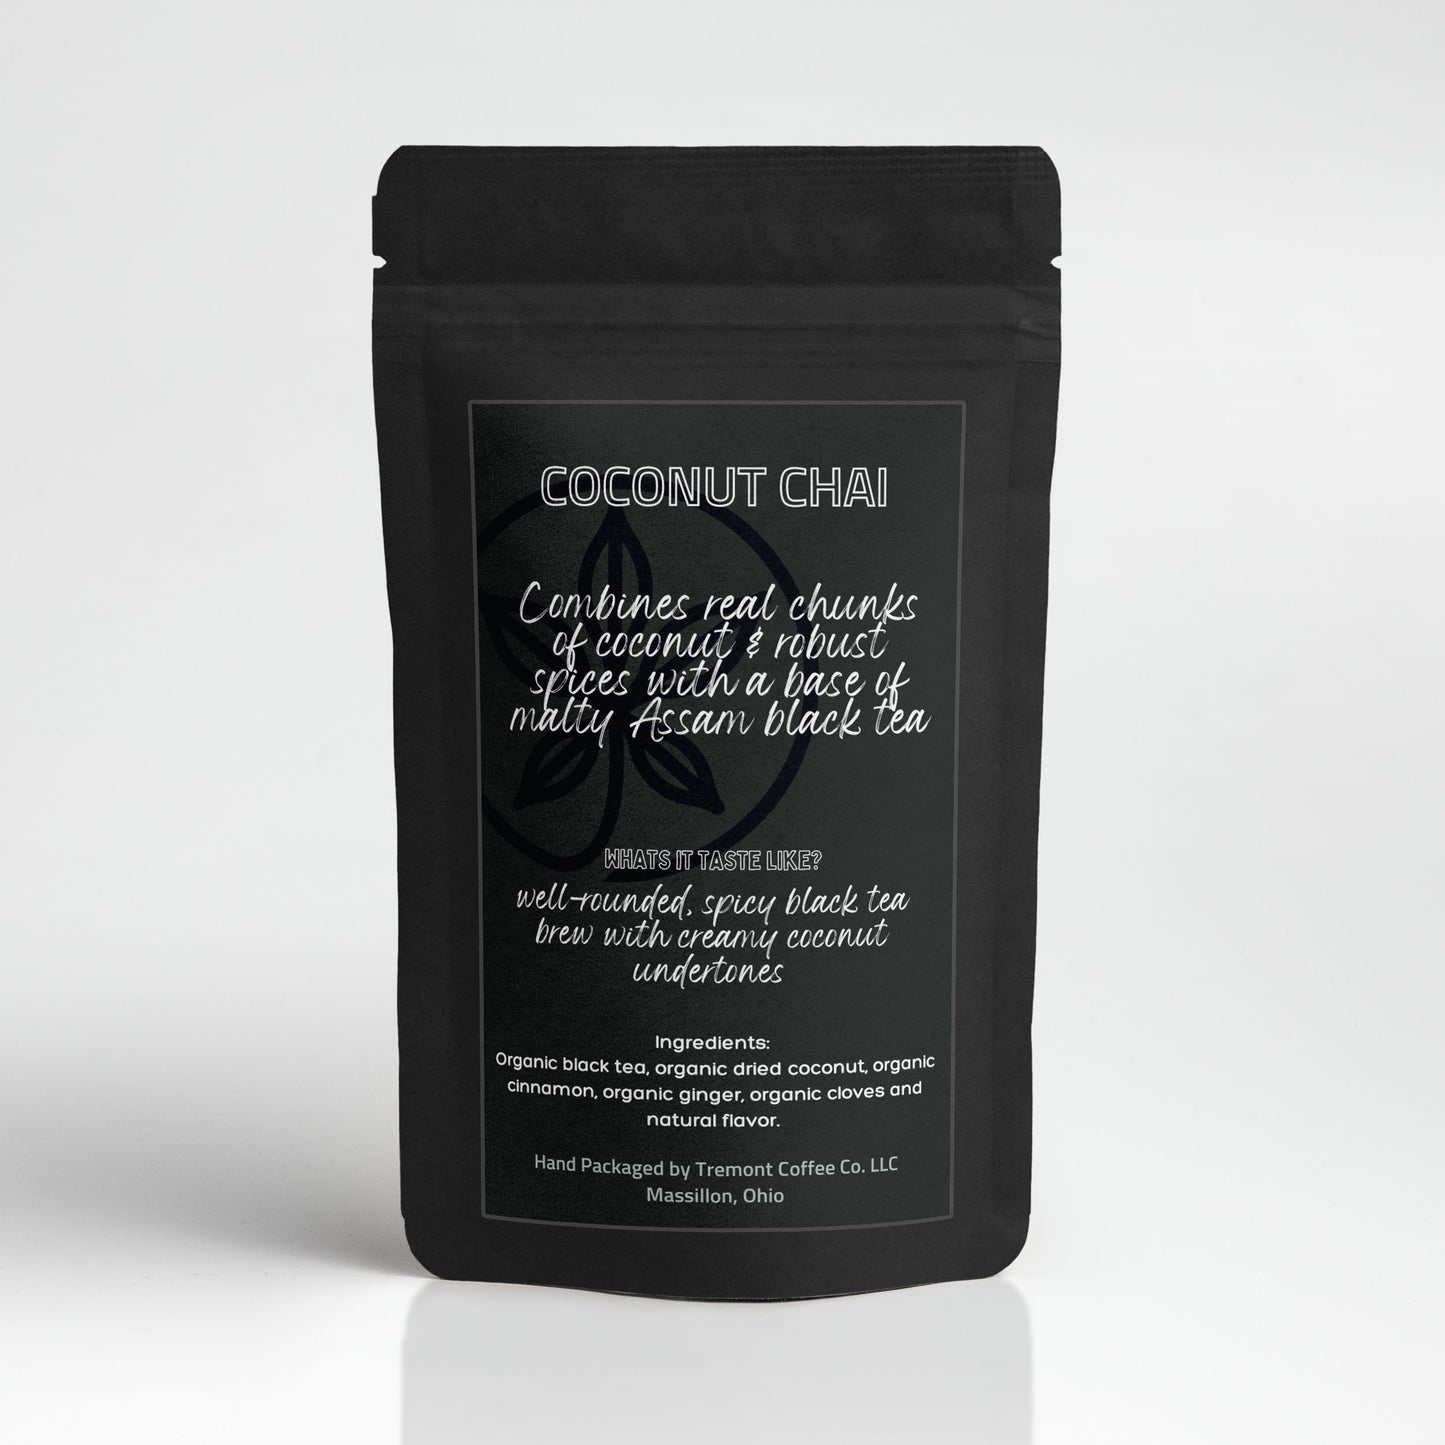 Coconut Chai - Loose Leaf Tea